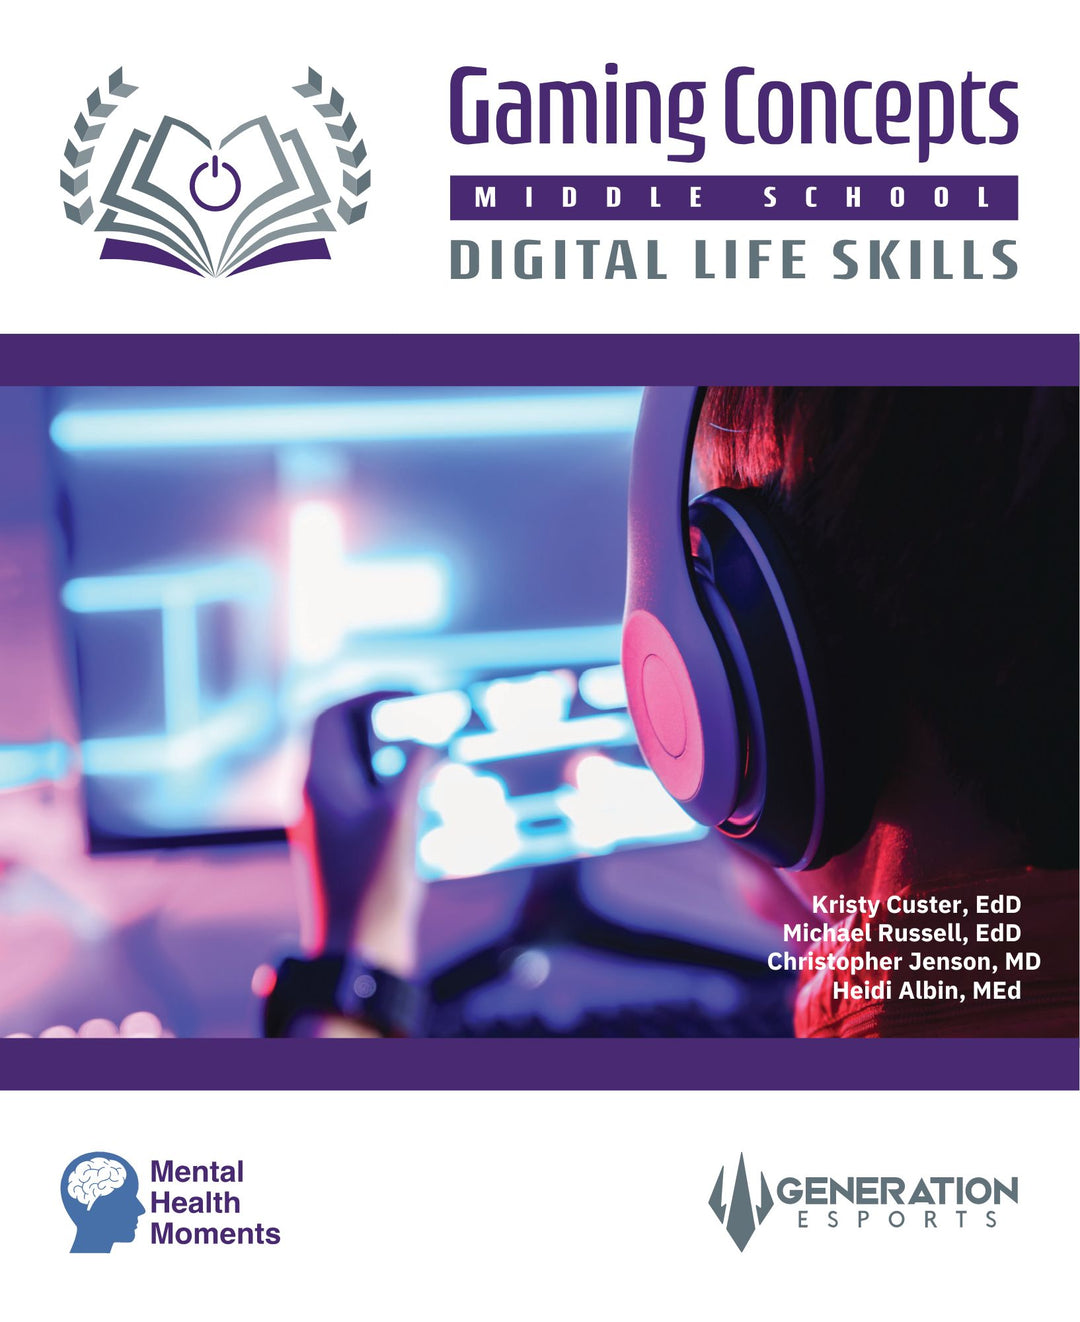 Generation Esports: Gaming Concepts - Digital Life Skills